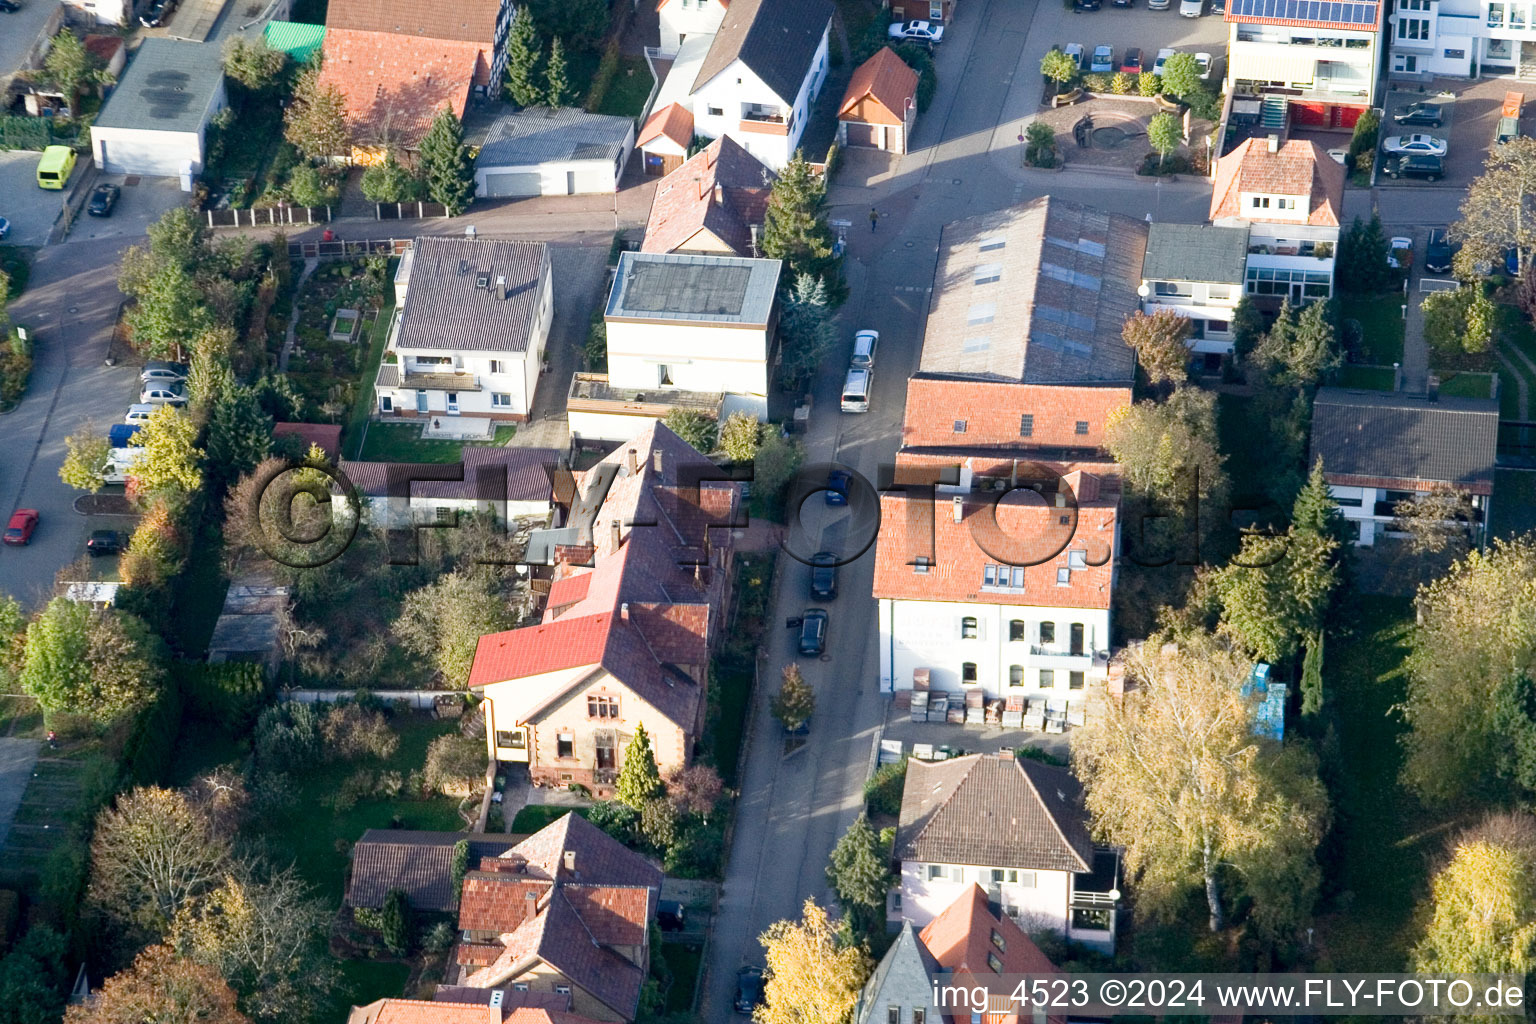 Drone image of Bismarckstr in Kandel in the state Rhineland-Palatinate, Germany